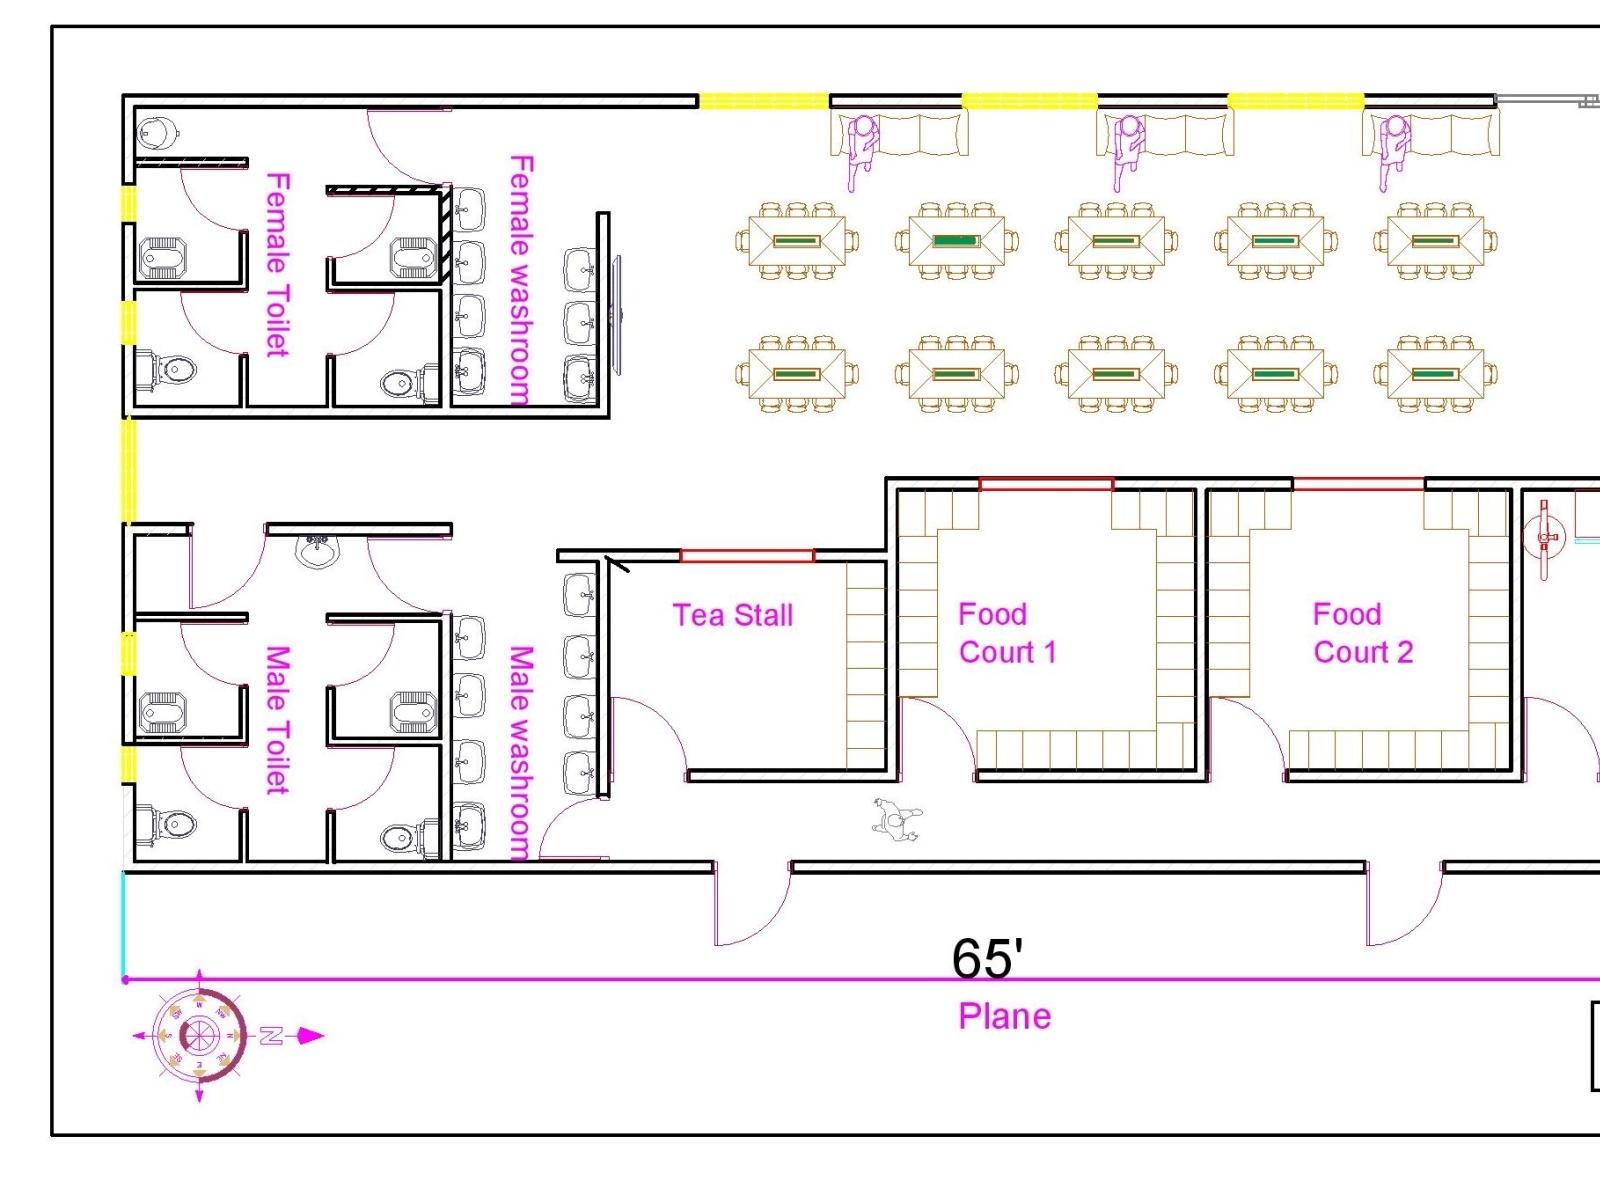 contoh business plan food court